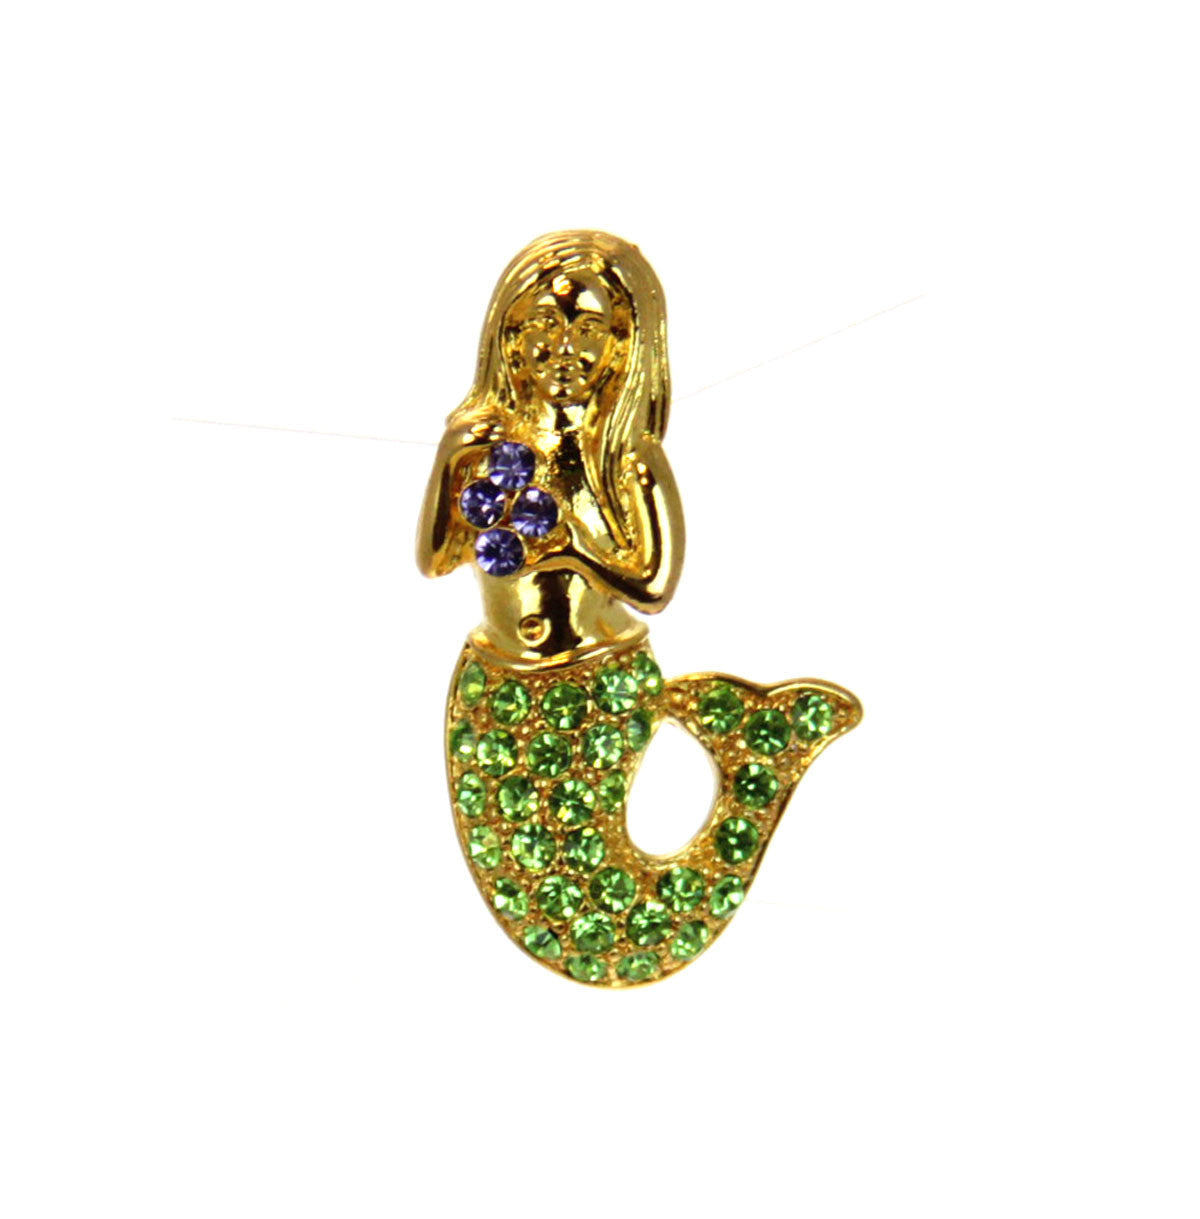 Mermaid Pin Gold, Green